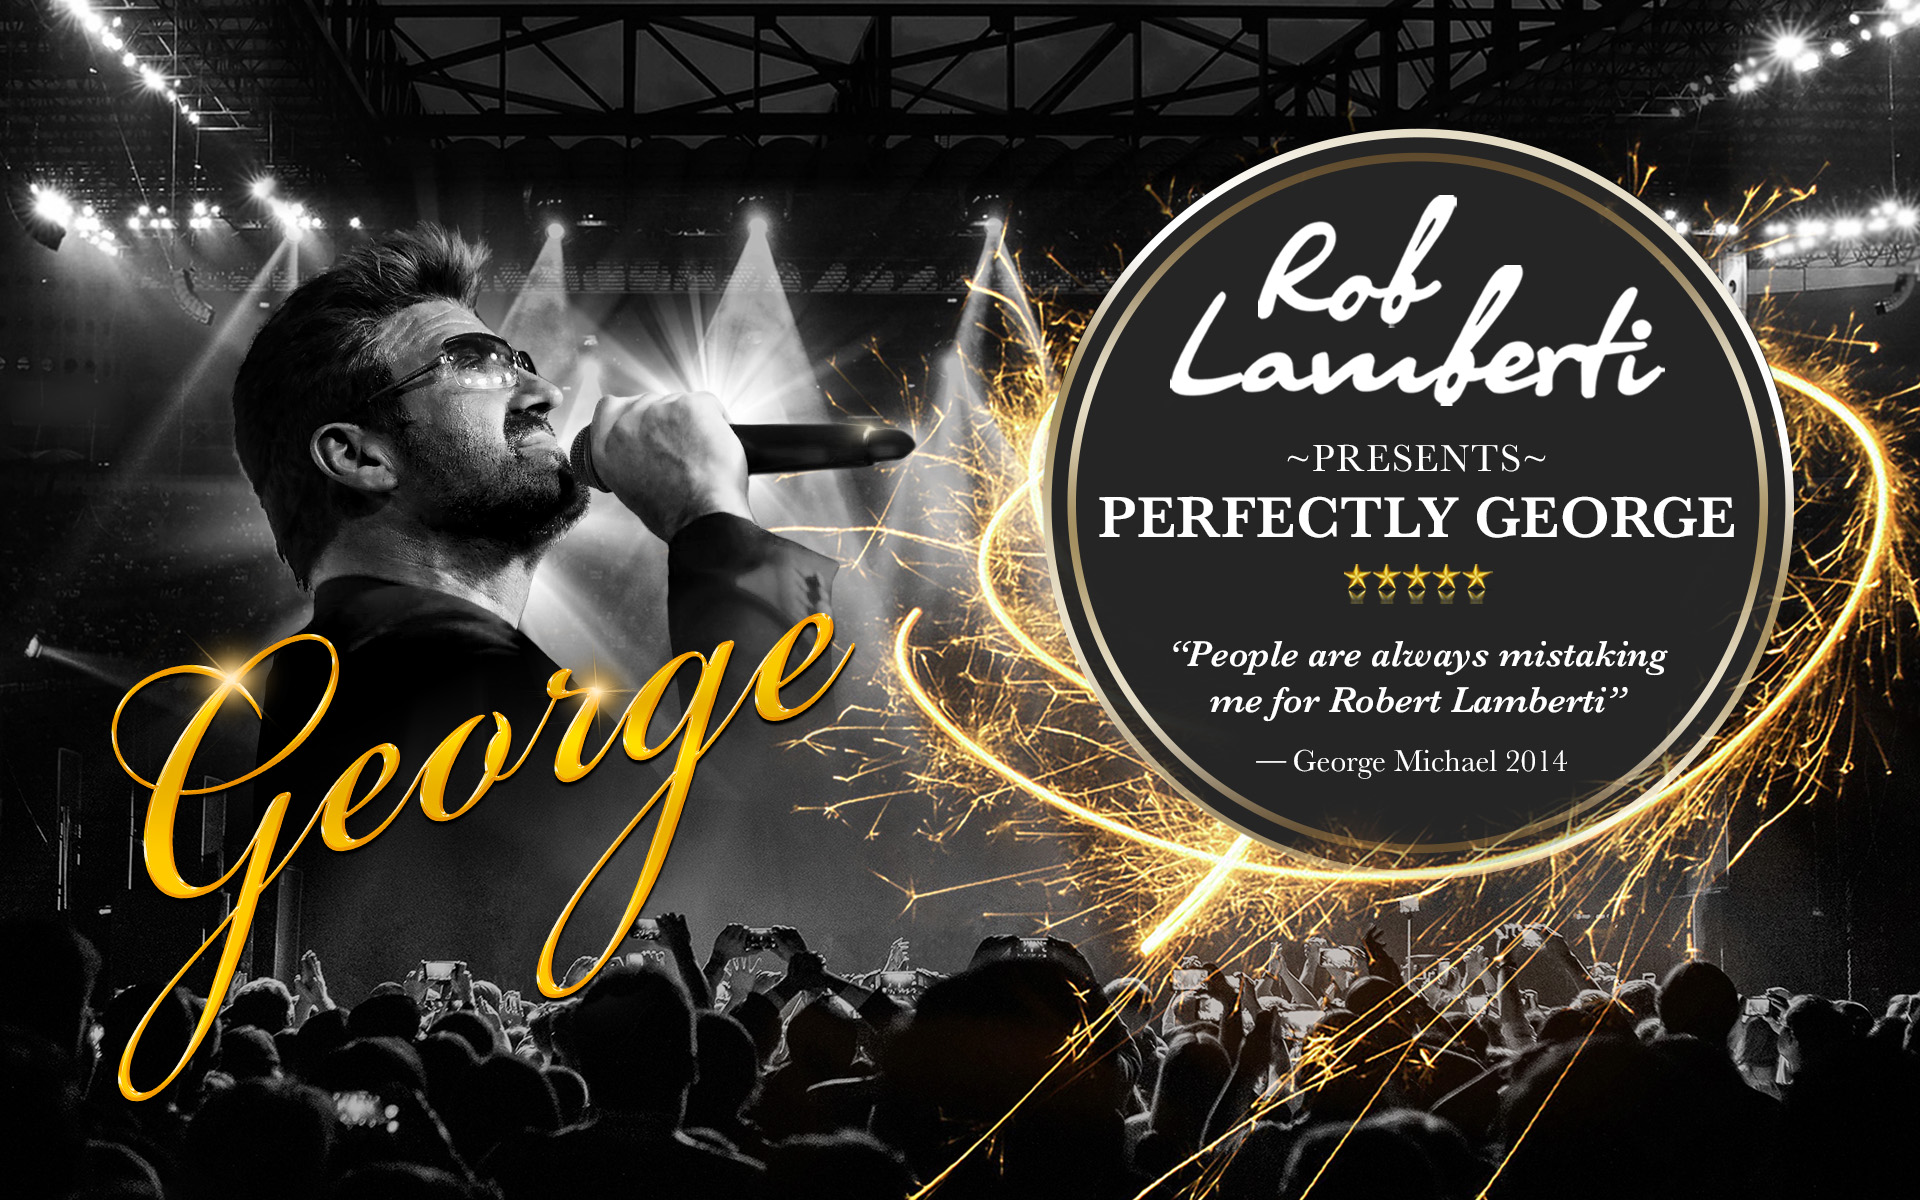 Rob Lamberti presents PERFECTLY GEORGE MICHAEL – TONIGHT!